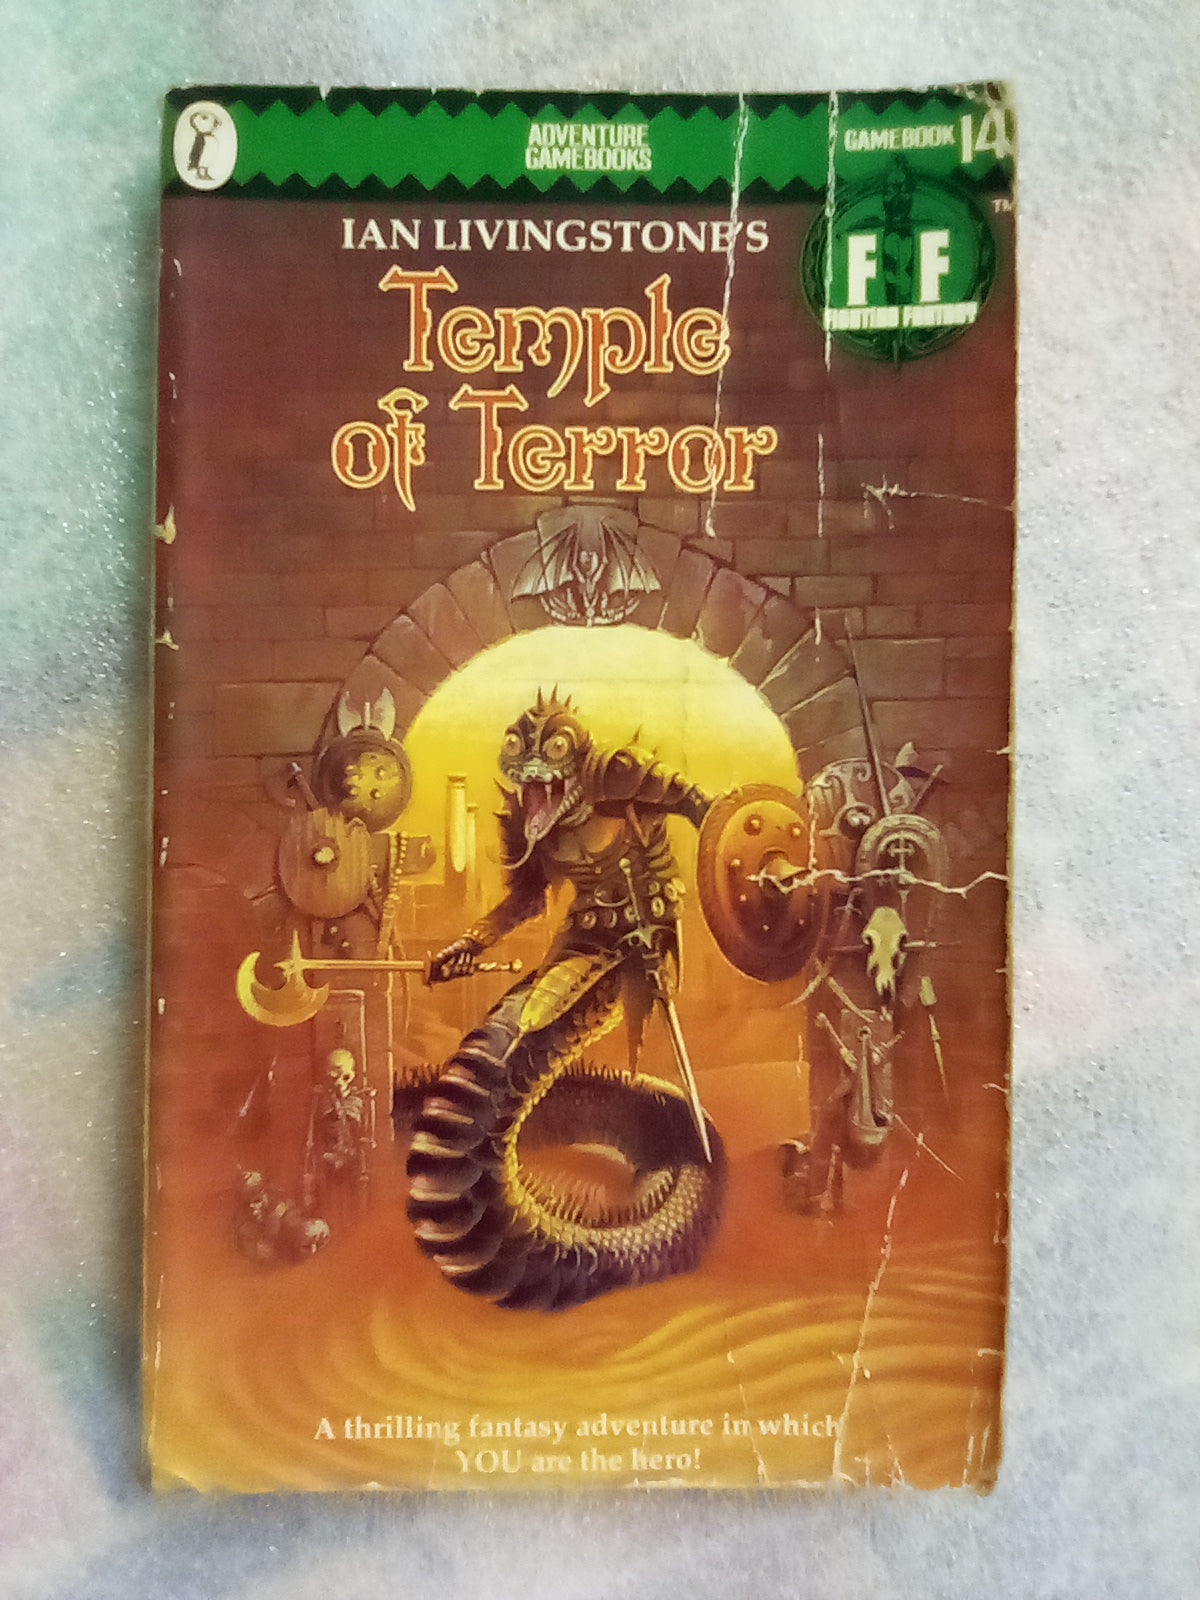 Fighting Fantasy #14 Temple of Terror by Ian Livingstone